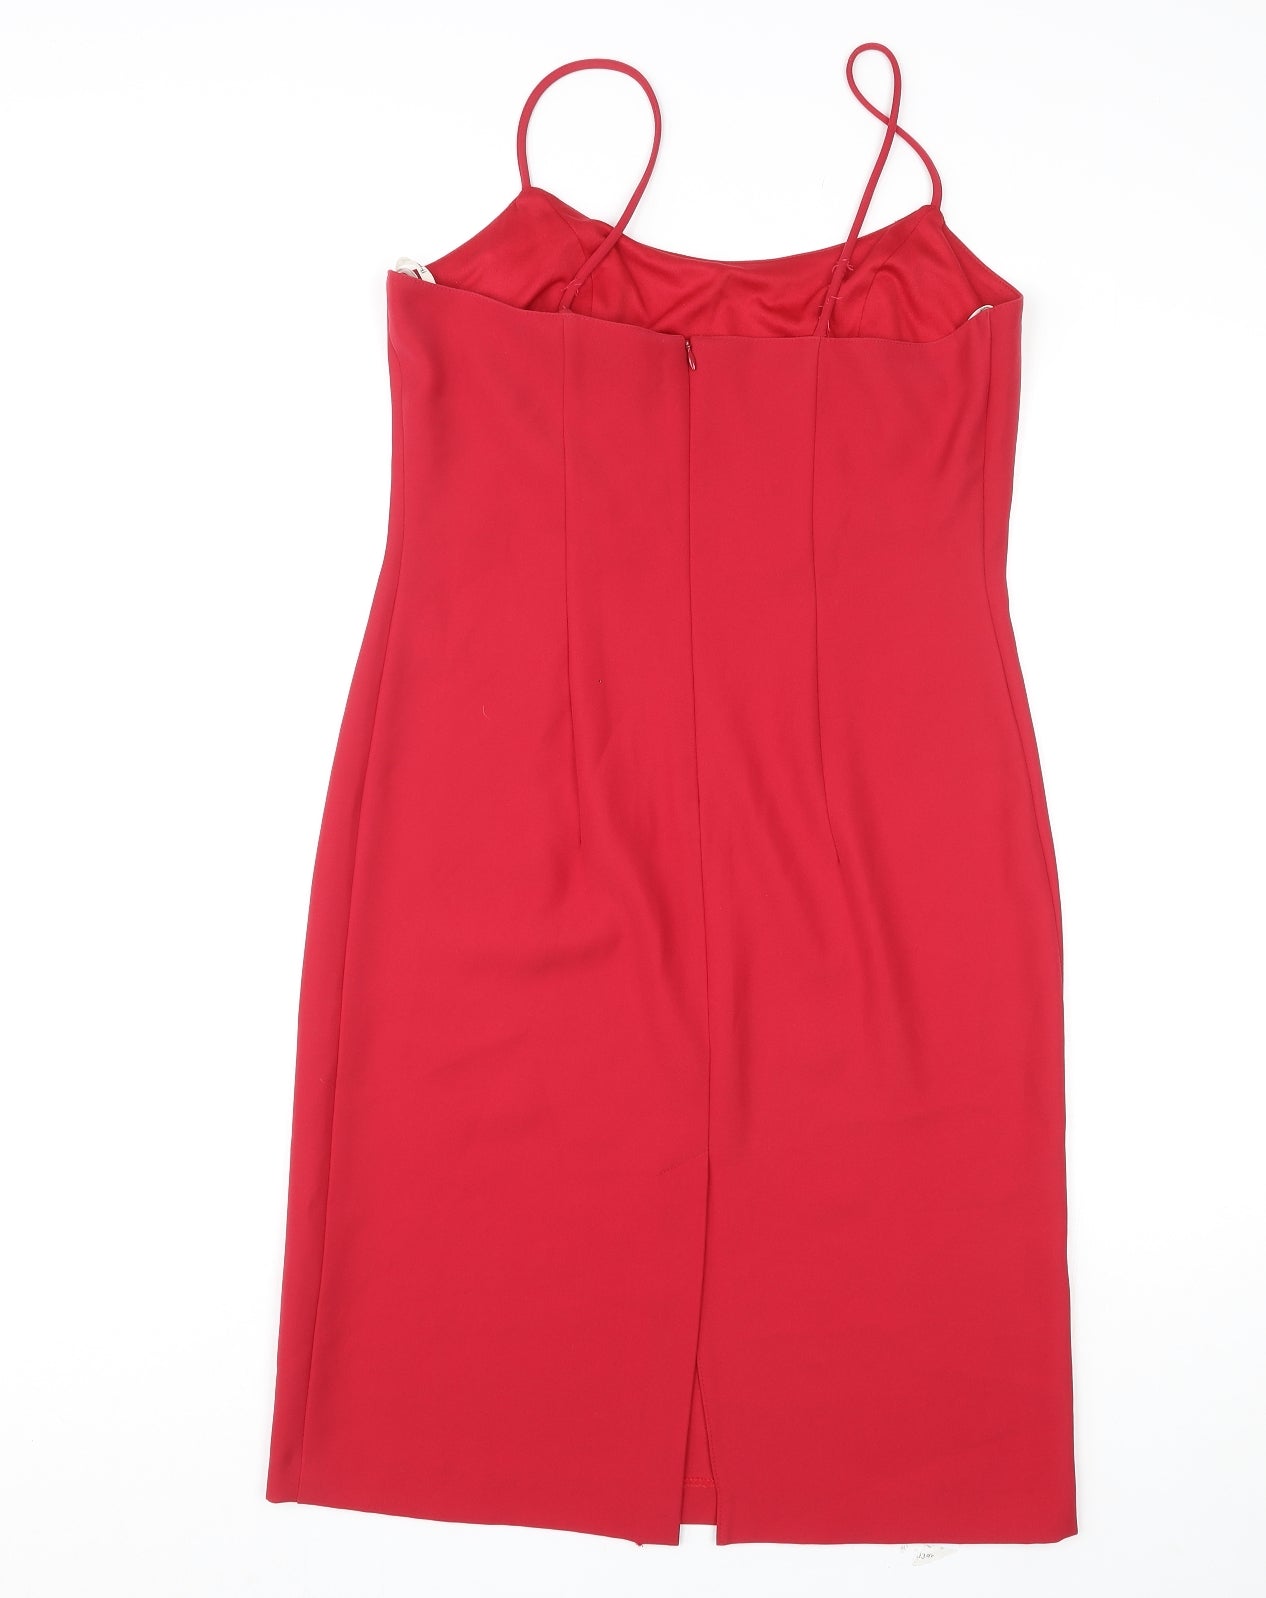 Joseph Ribkoff Womens Red Polyester Slip Dress Size 12 Round Neck Zip